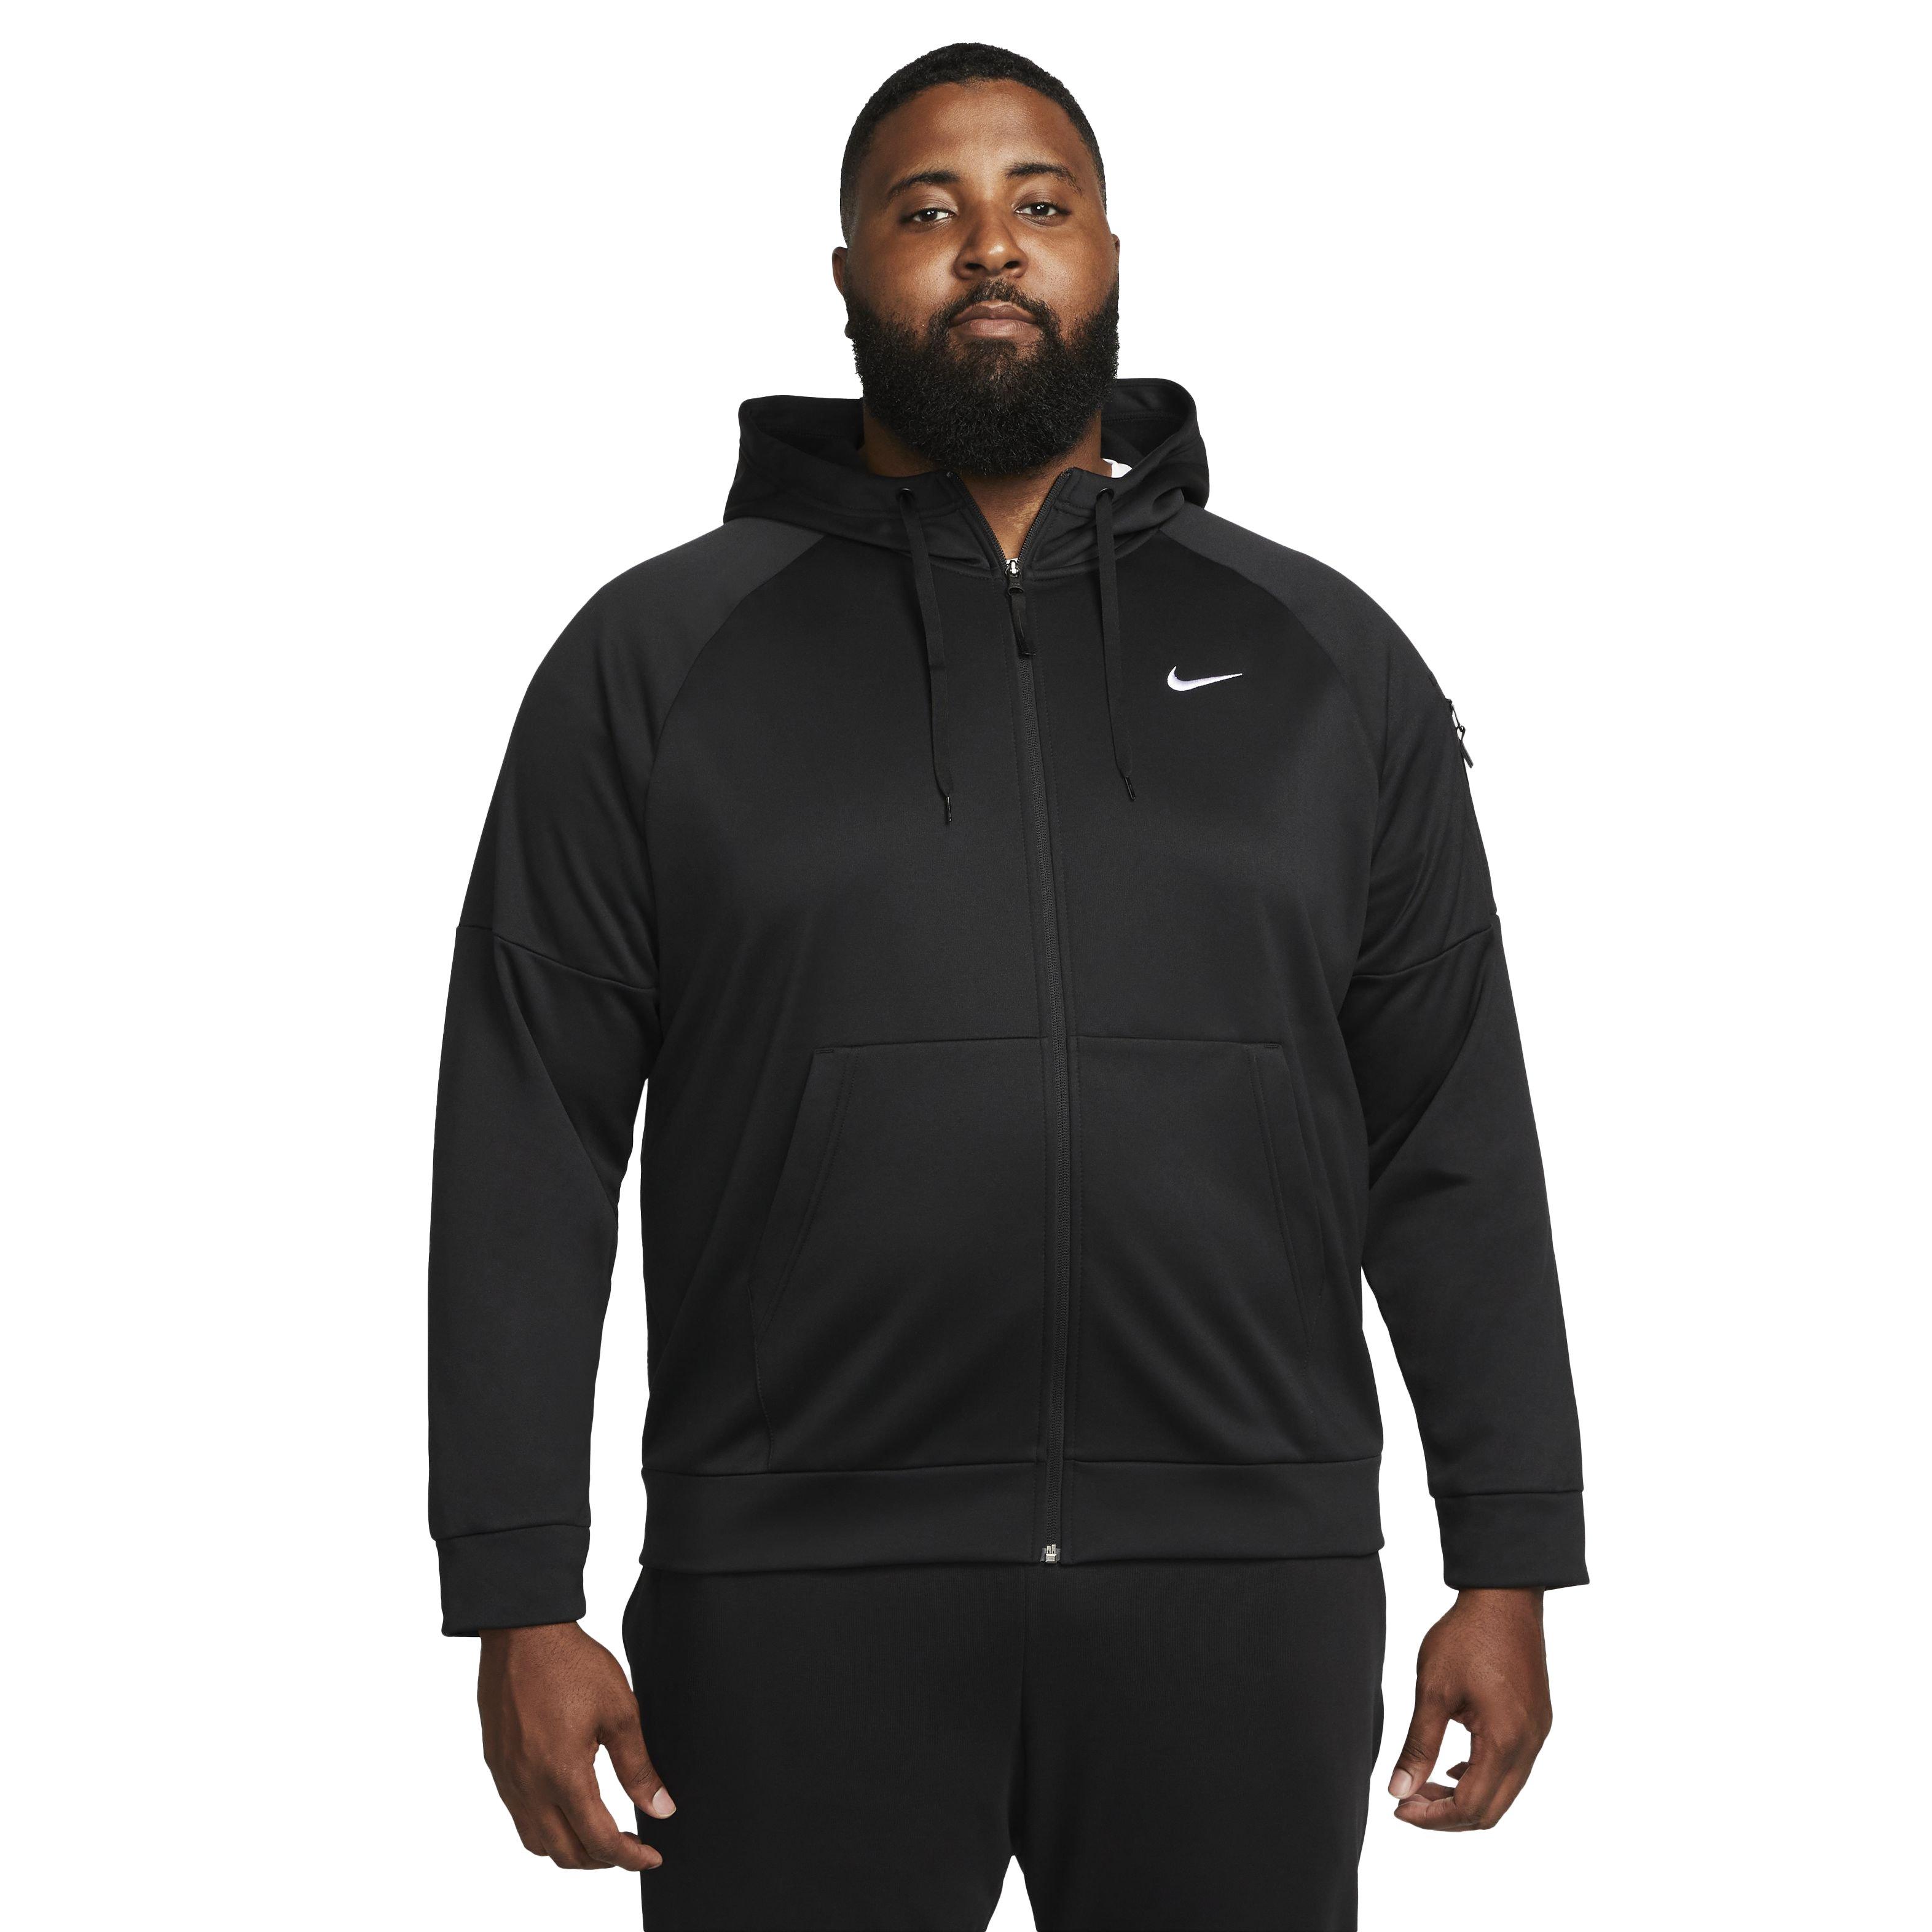 bijwoord Correct titel Nike Men's Therma-Fit Full-Zip Fitness Fleece Hoodie